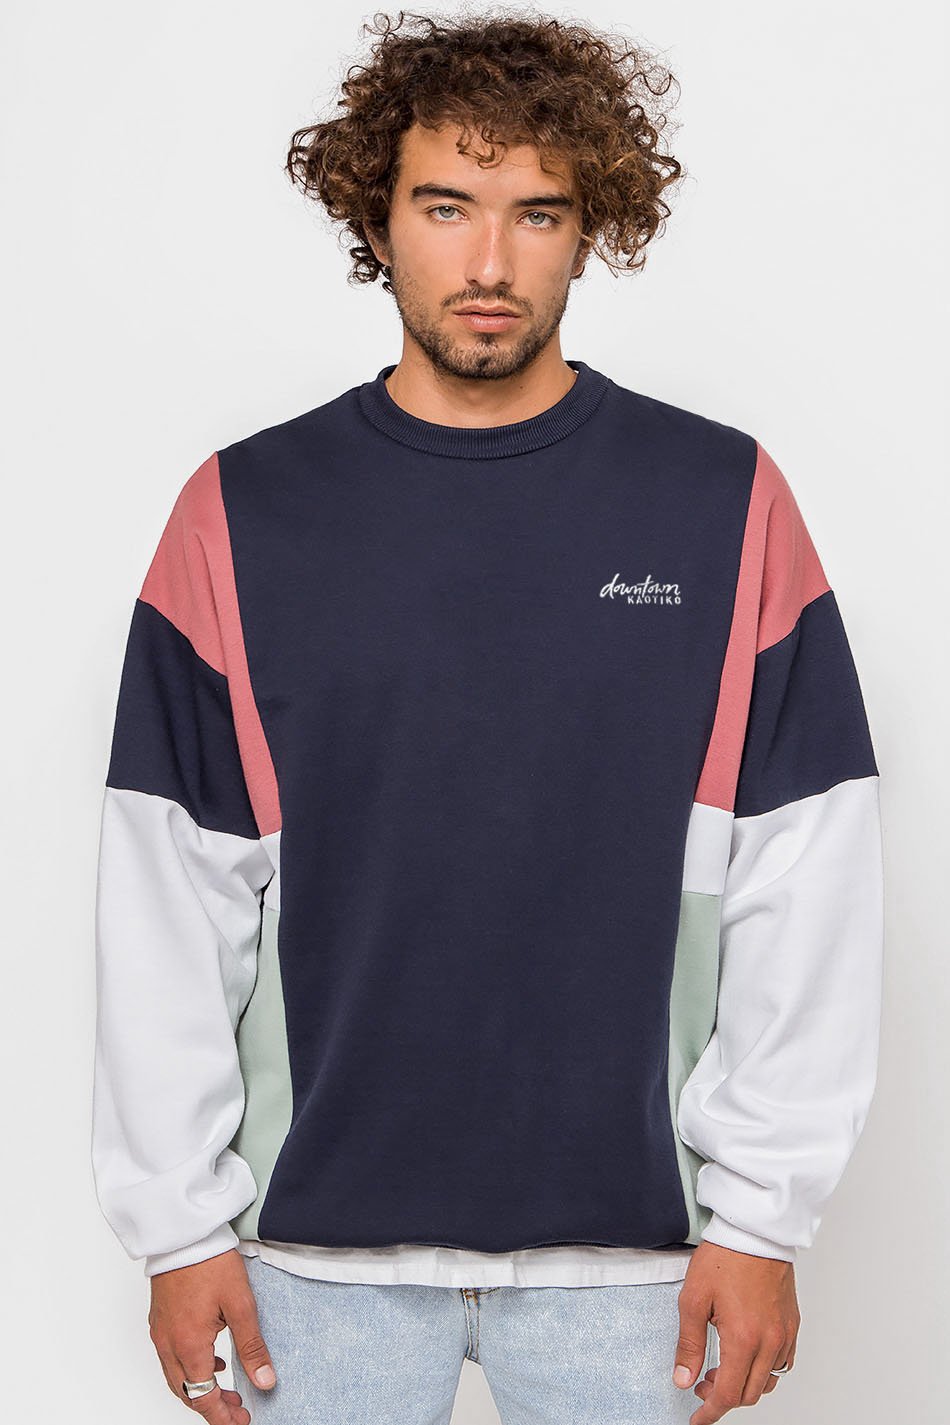 Portland Marine Sweatshirt